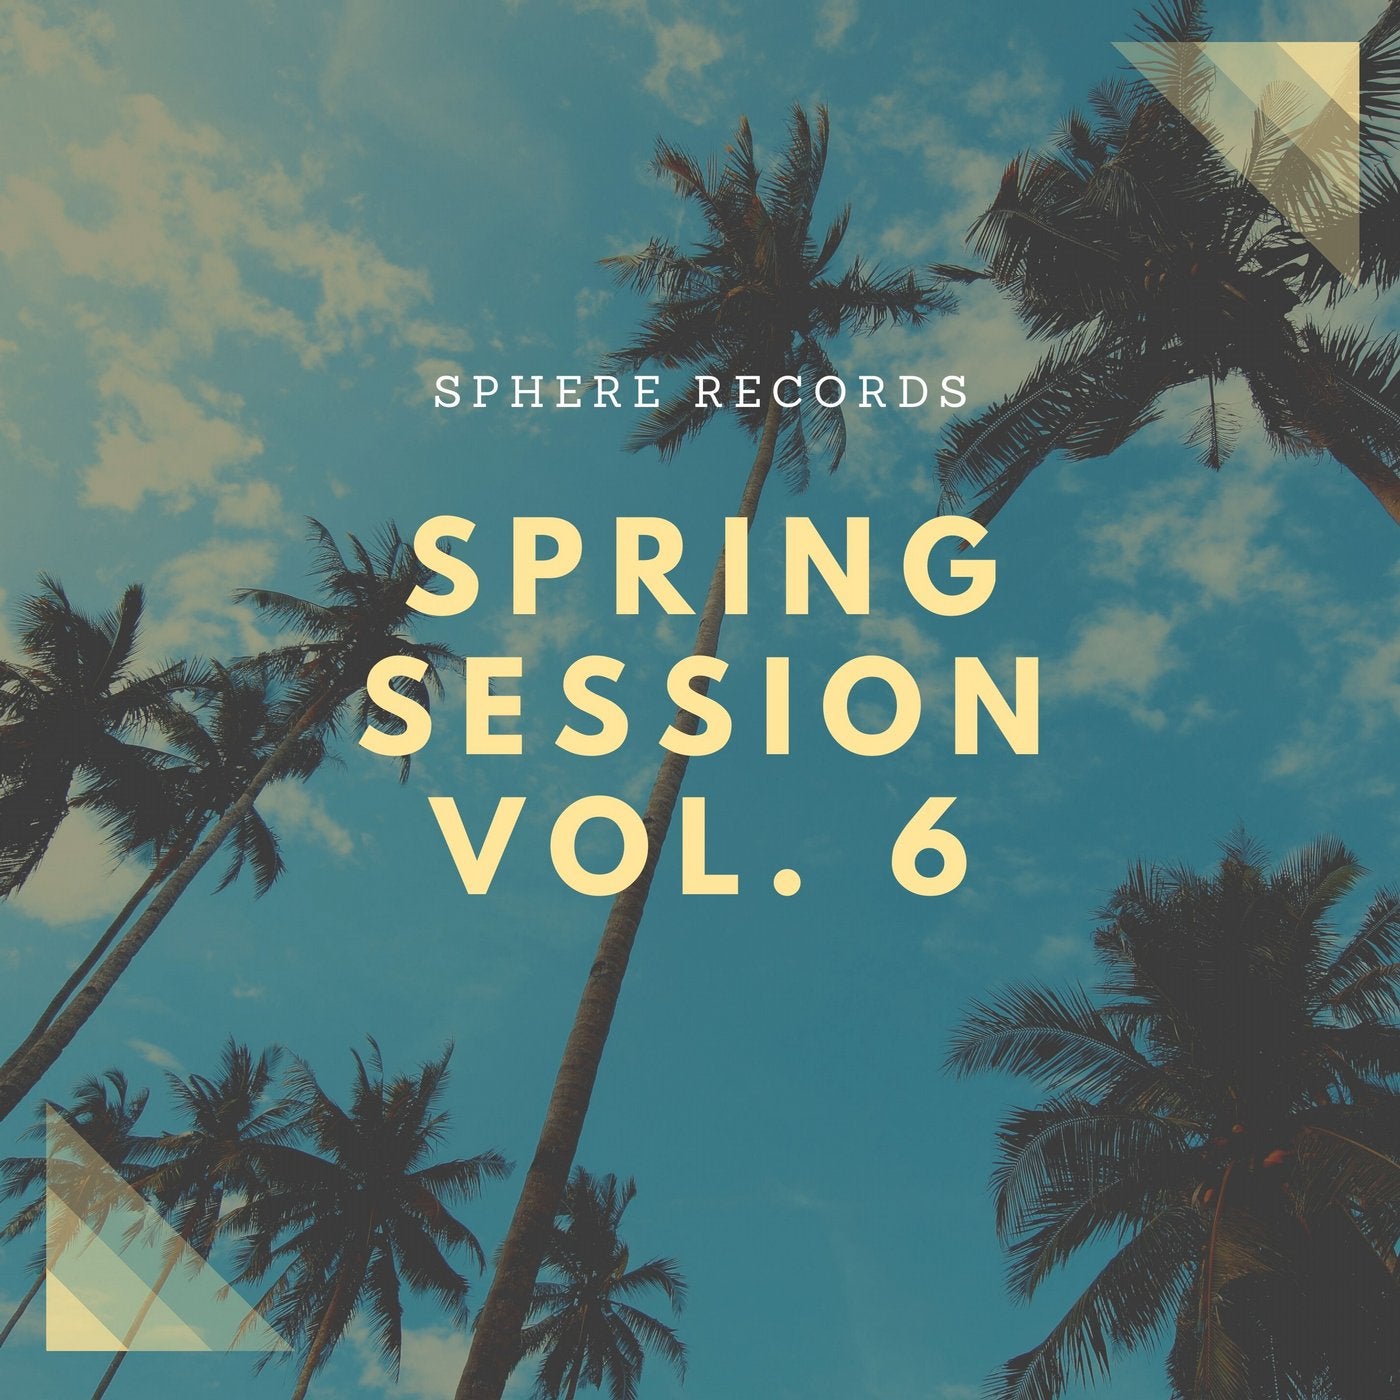 Spring Session, Vol. 6